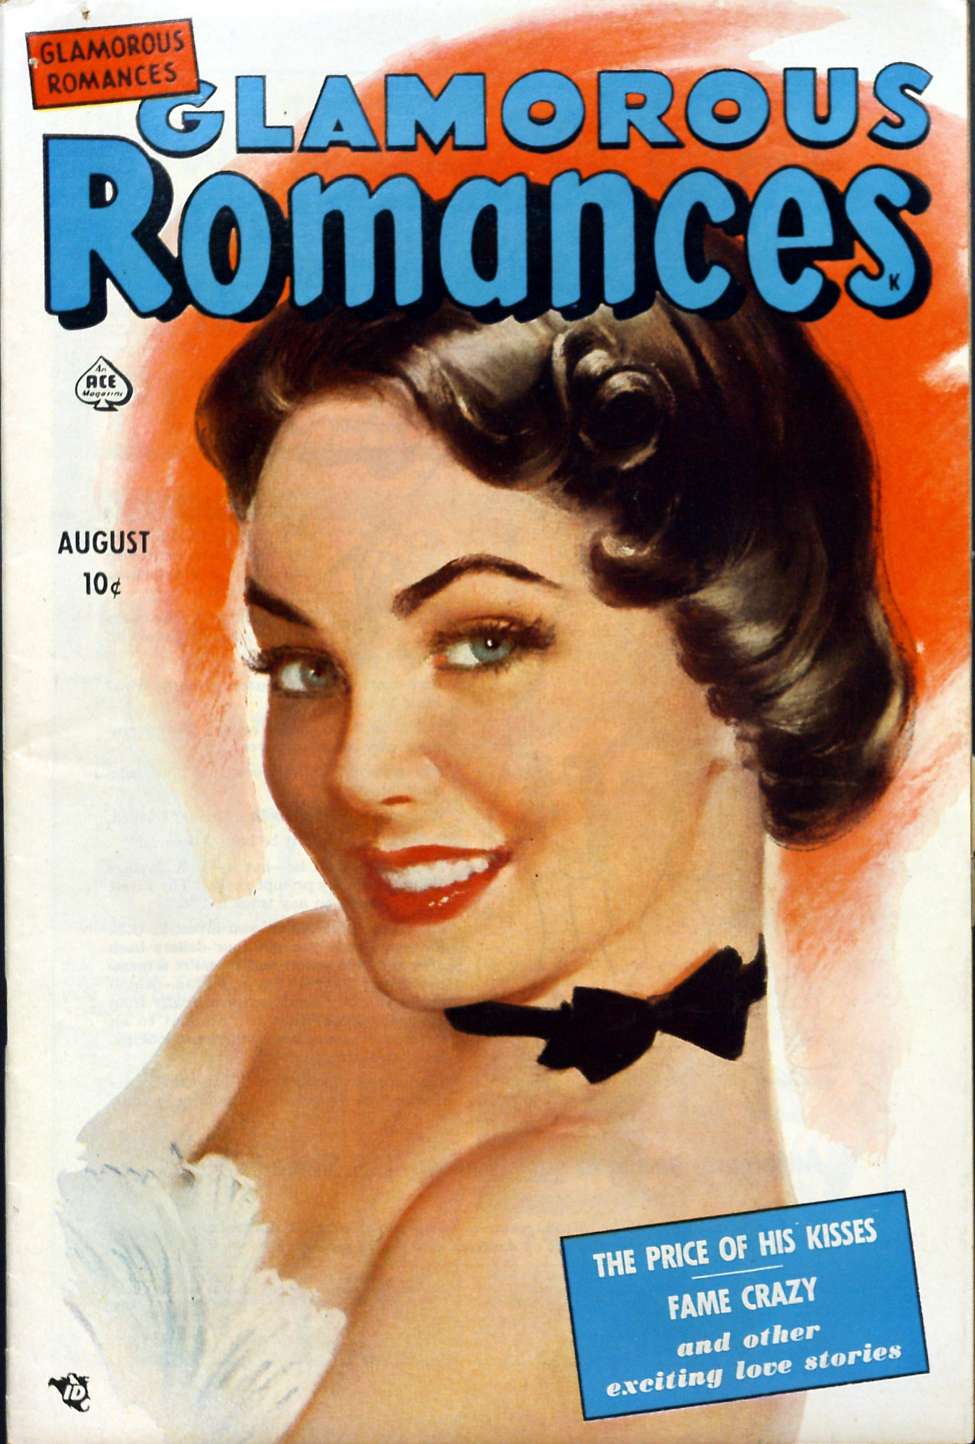 Book Cover For Glamorous Romances 53 (alt) - Version 2